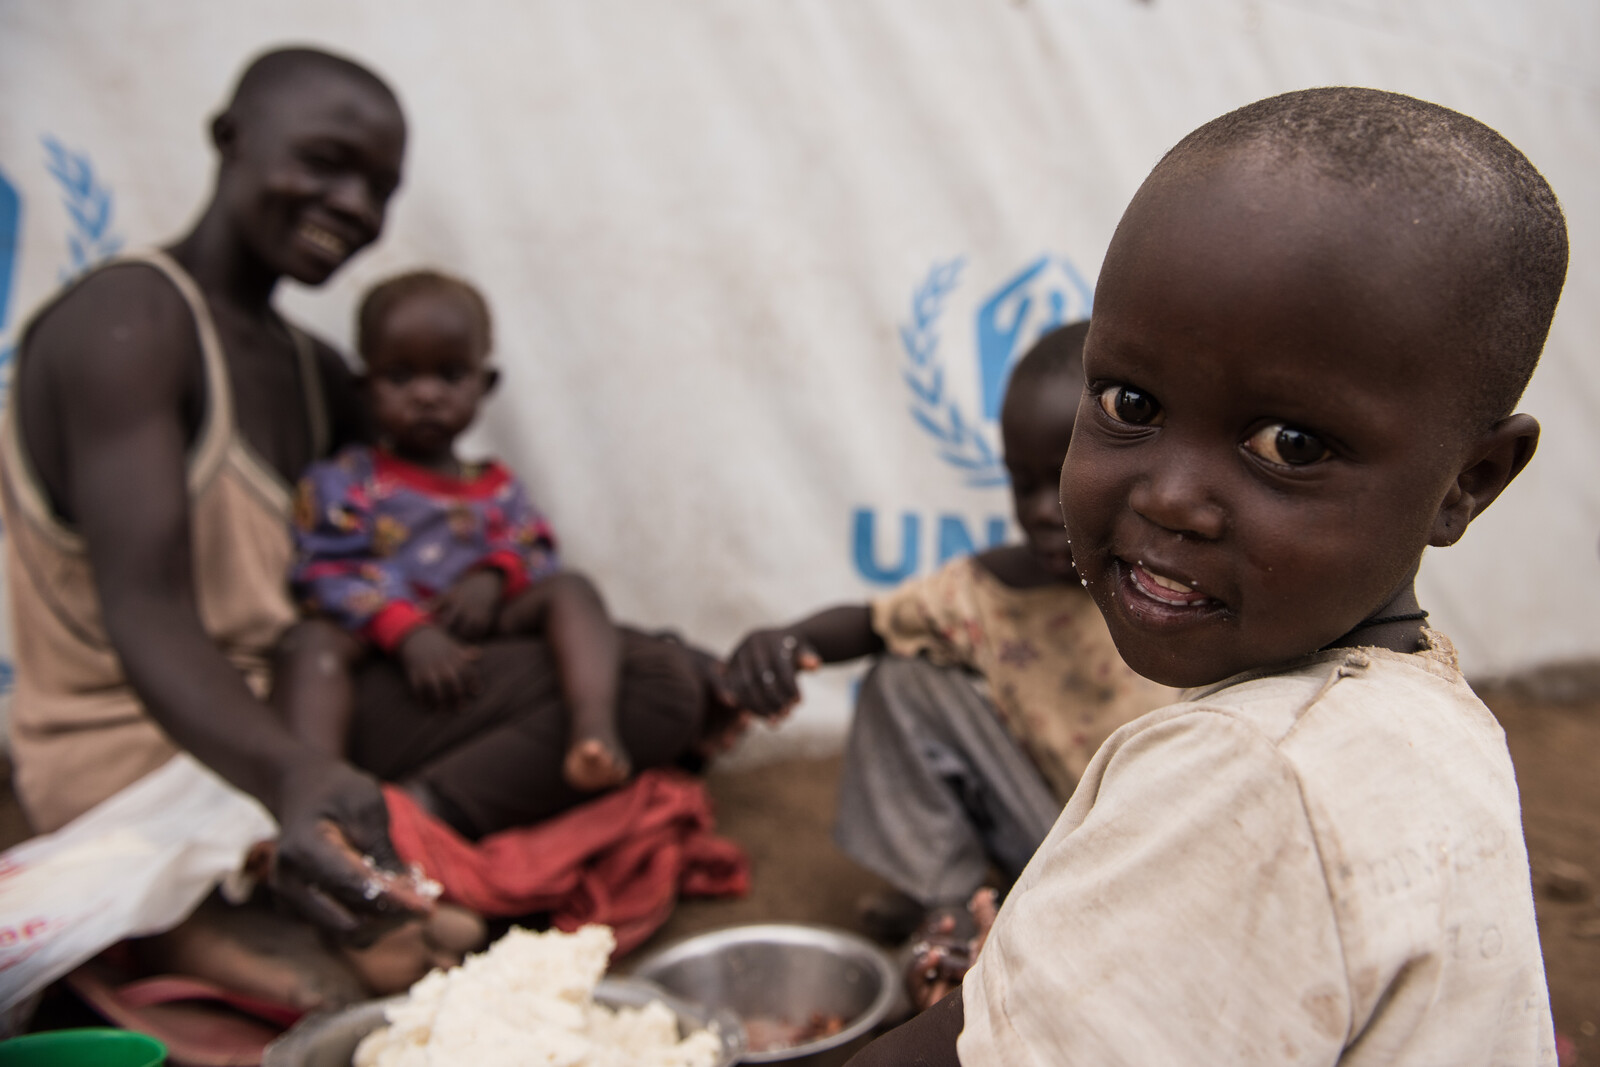 Eine Flüchtlingsfamilie aus dem Südsudan in Uganda